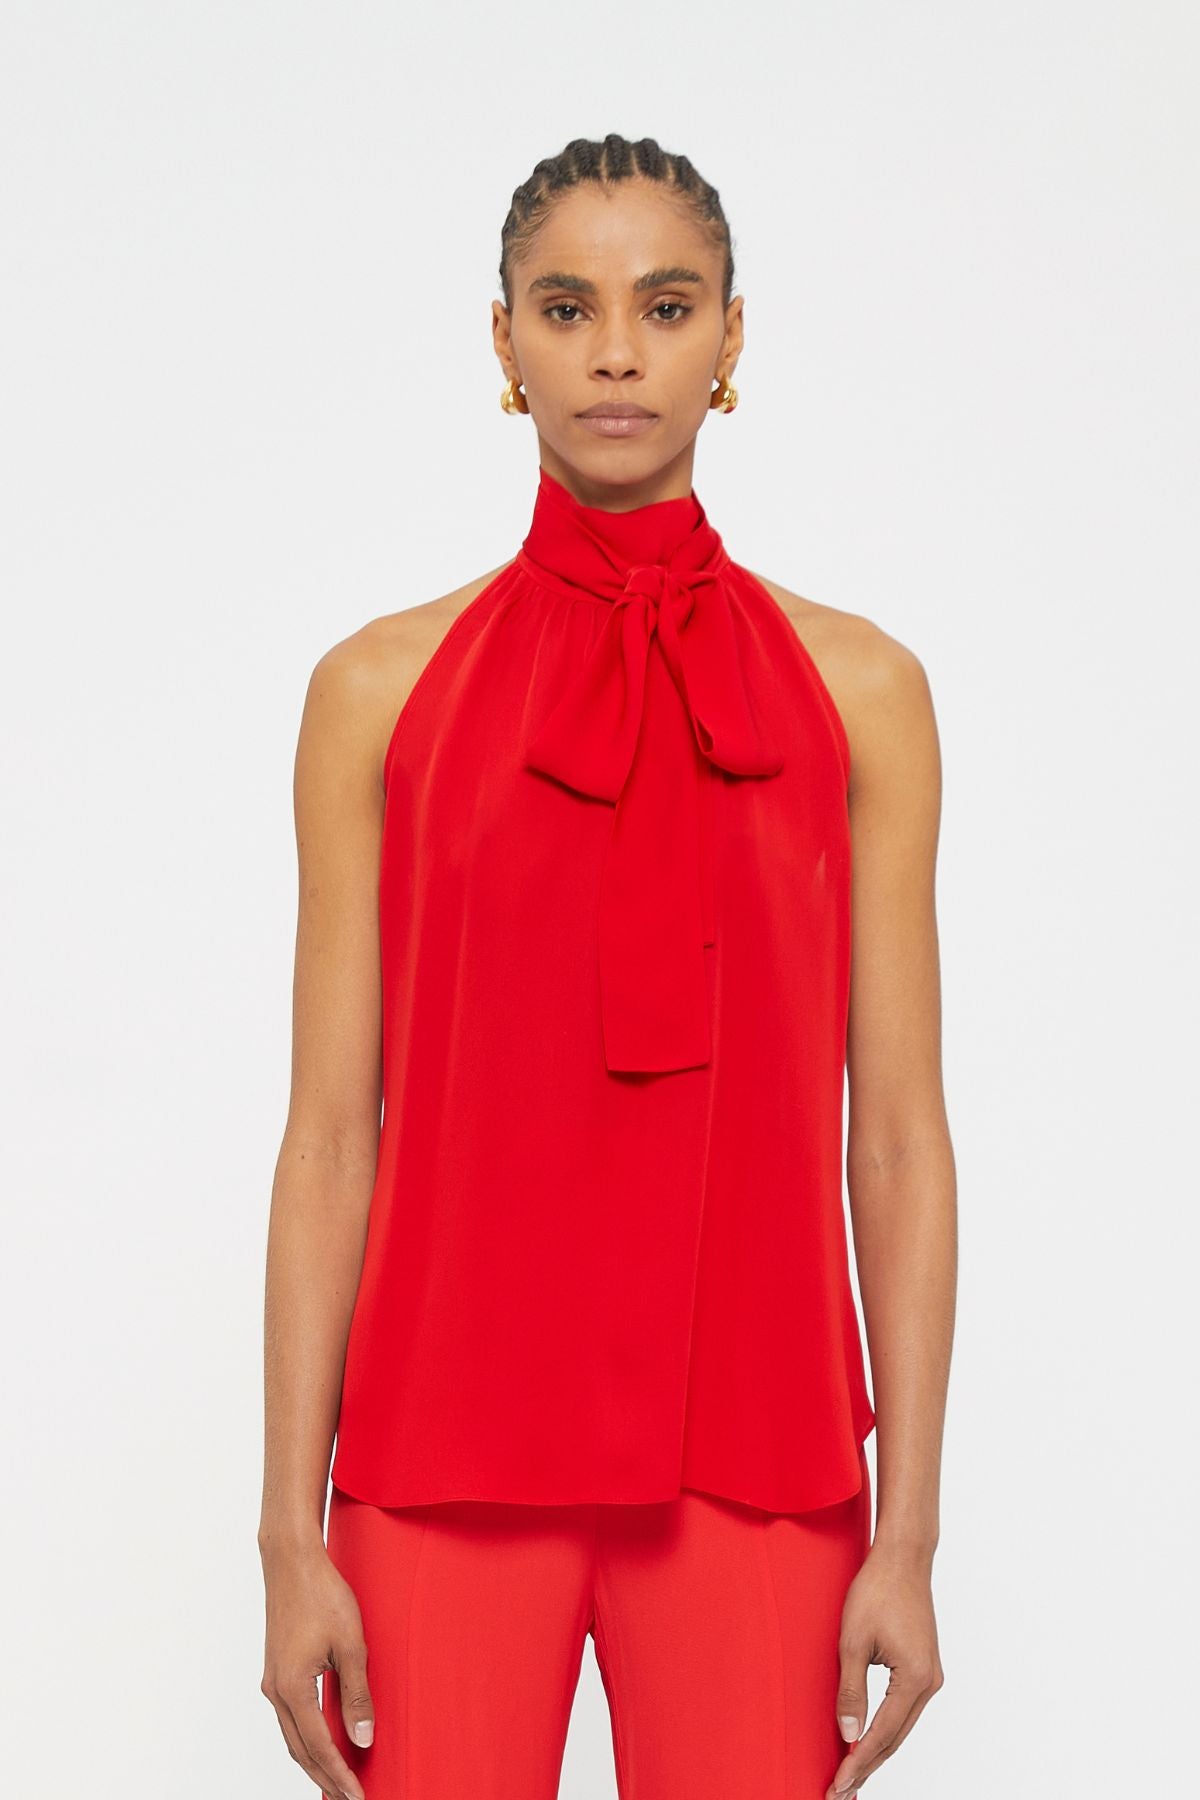 Australian women's designer Grace Tie Neck Top crafted from red silk